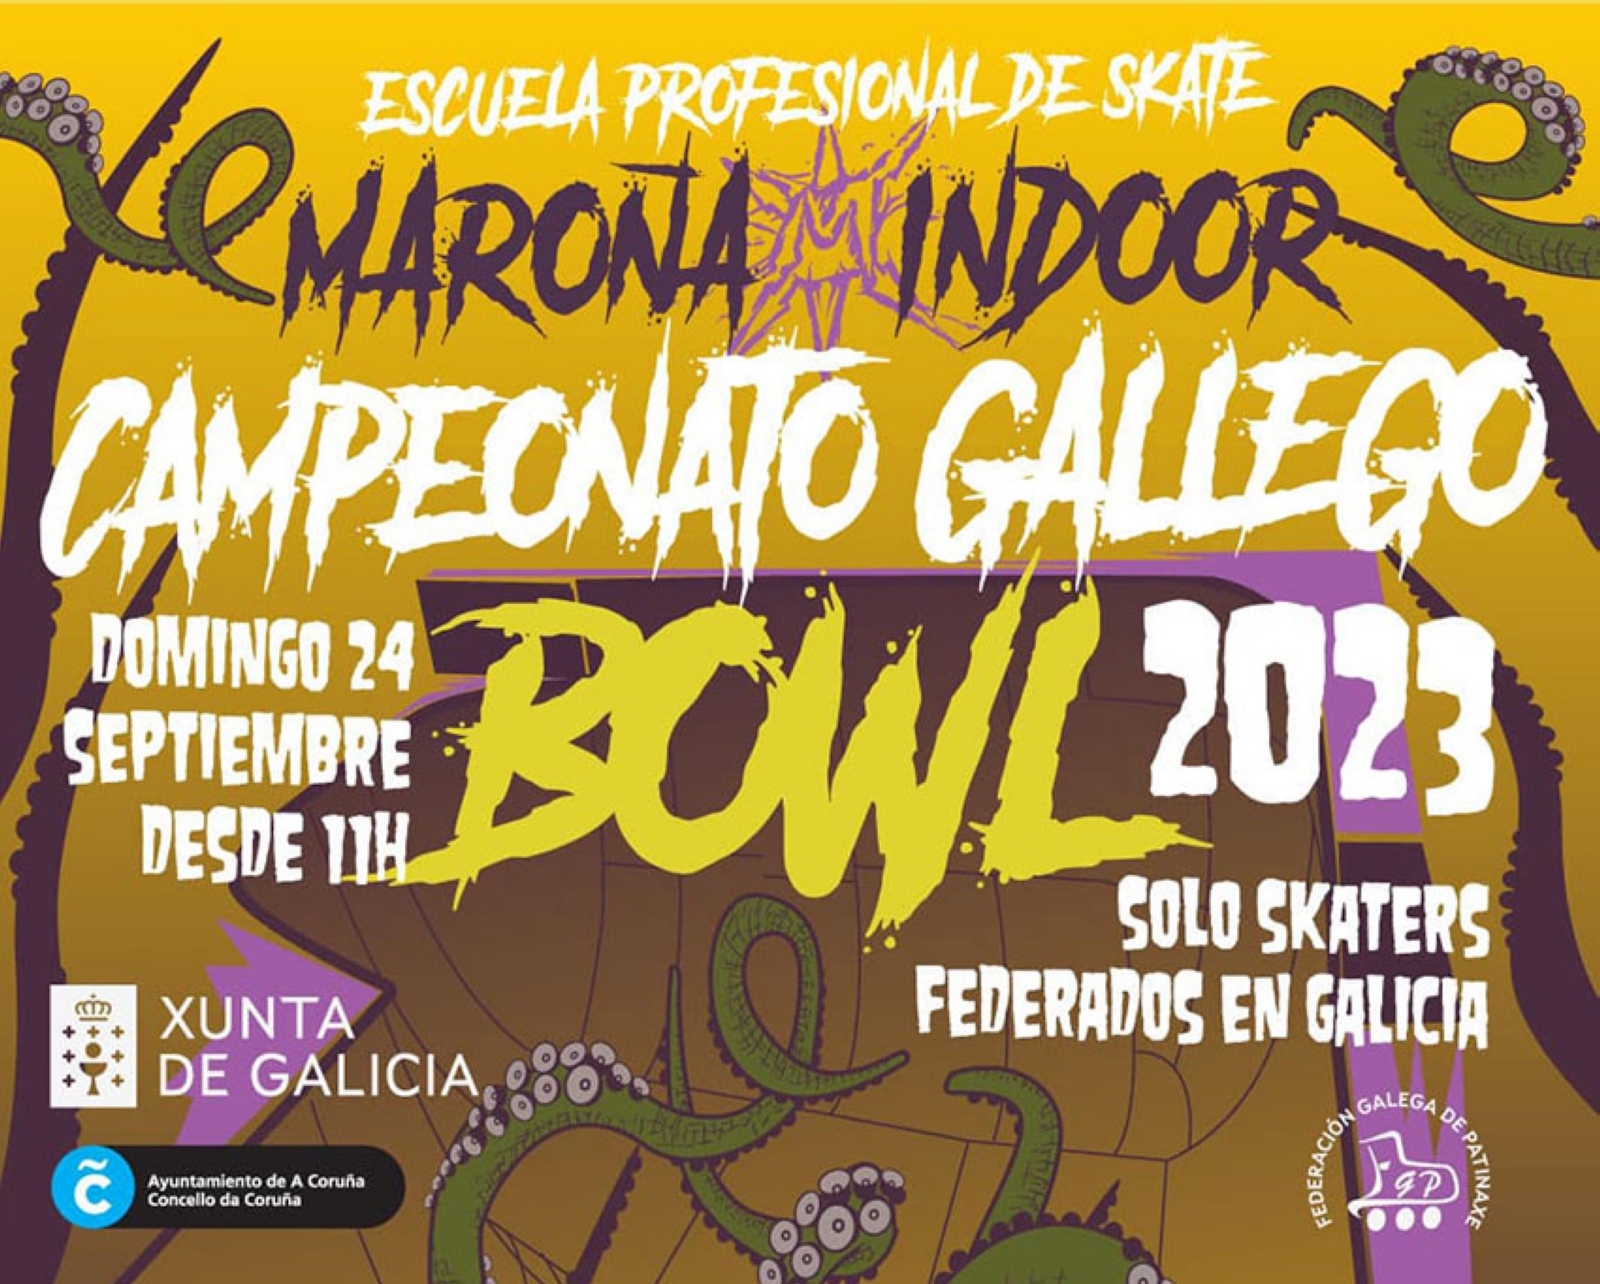 Campeonato Gallego Bowl y Minirampa 2023